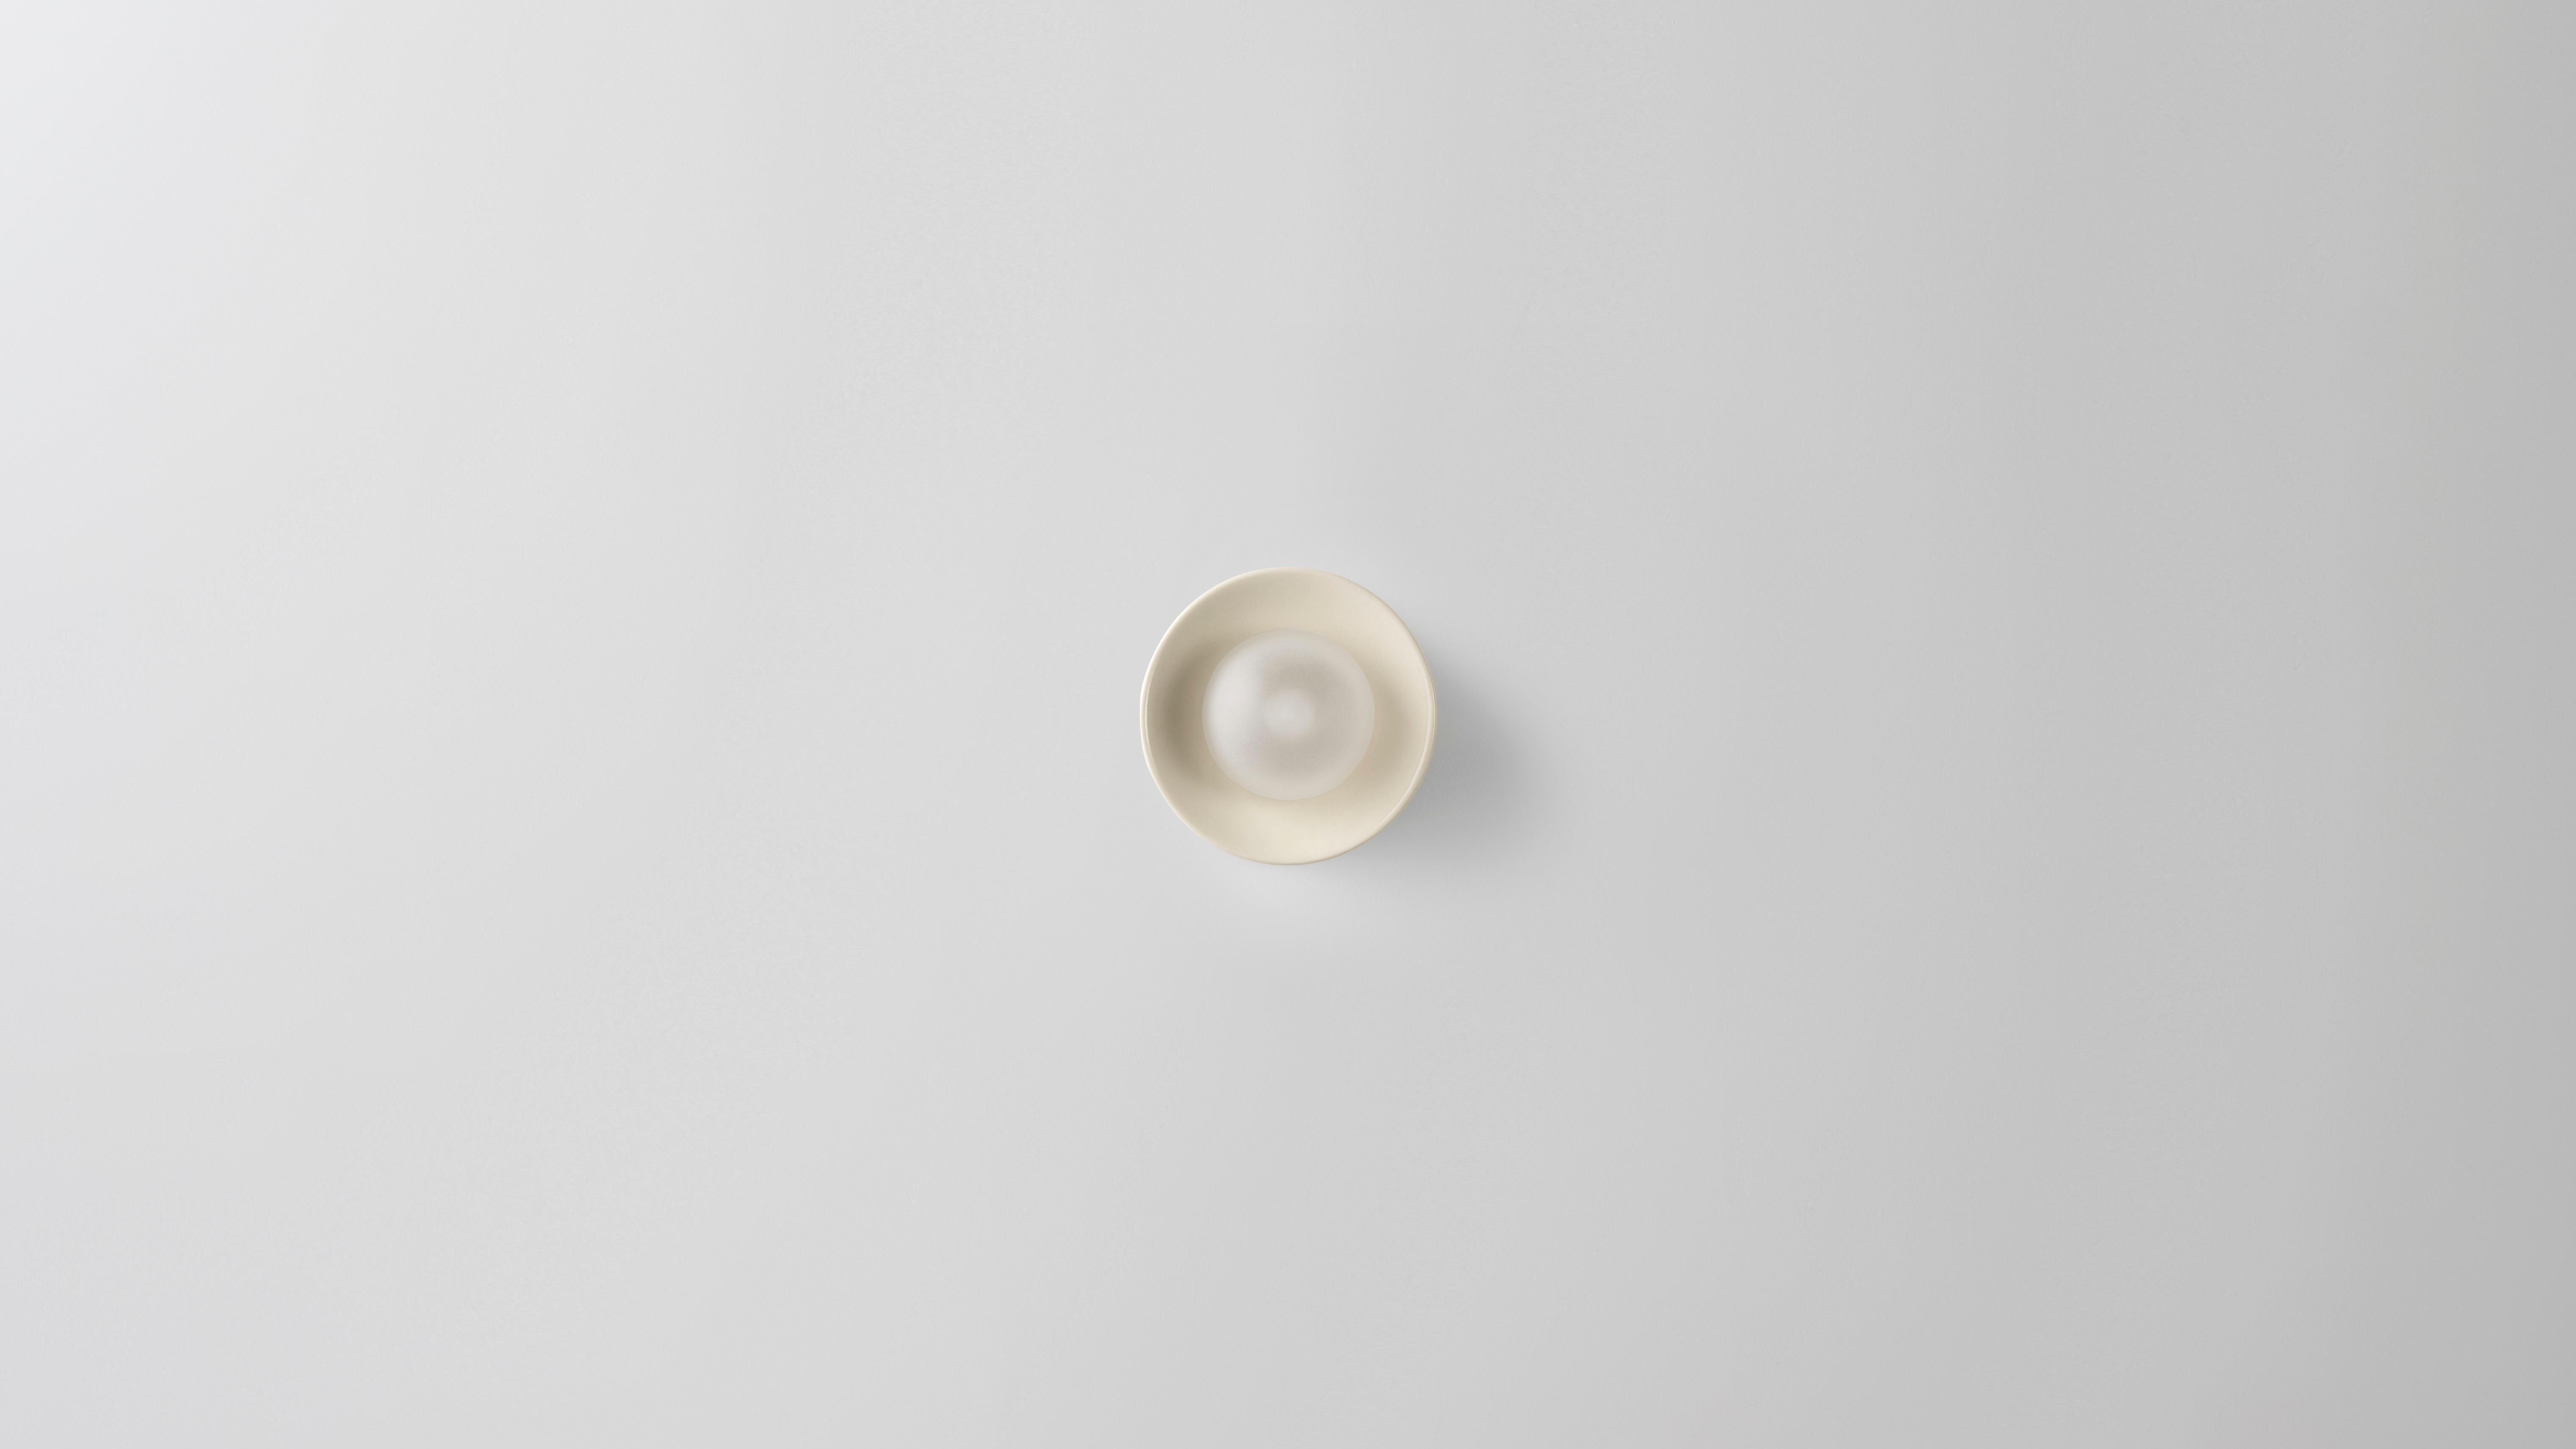 Micro Ceramic Anton wall sconce by Volker Haug
Dimensions: Diameter 8 cm x D 6.5 cm 
Material: Cast Ceramic. 
Finish: Glazed Clear, Brown, or Crisp White.
Lamp: G9 LED (240V / 120V US). 12V option is available.
Glass Bulb: 45mm ø,